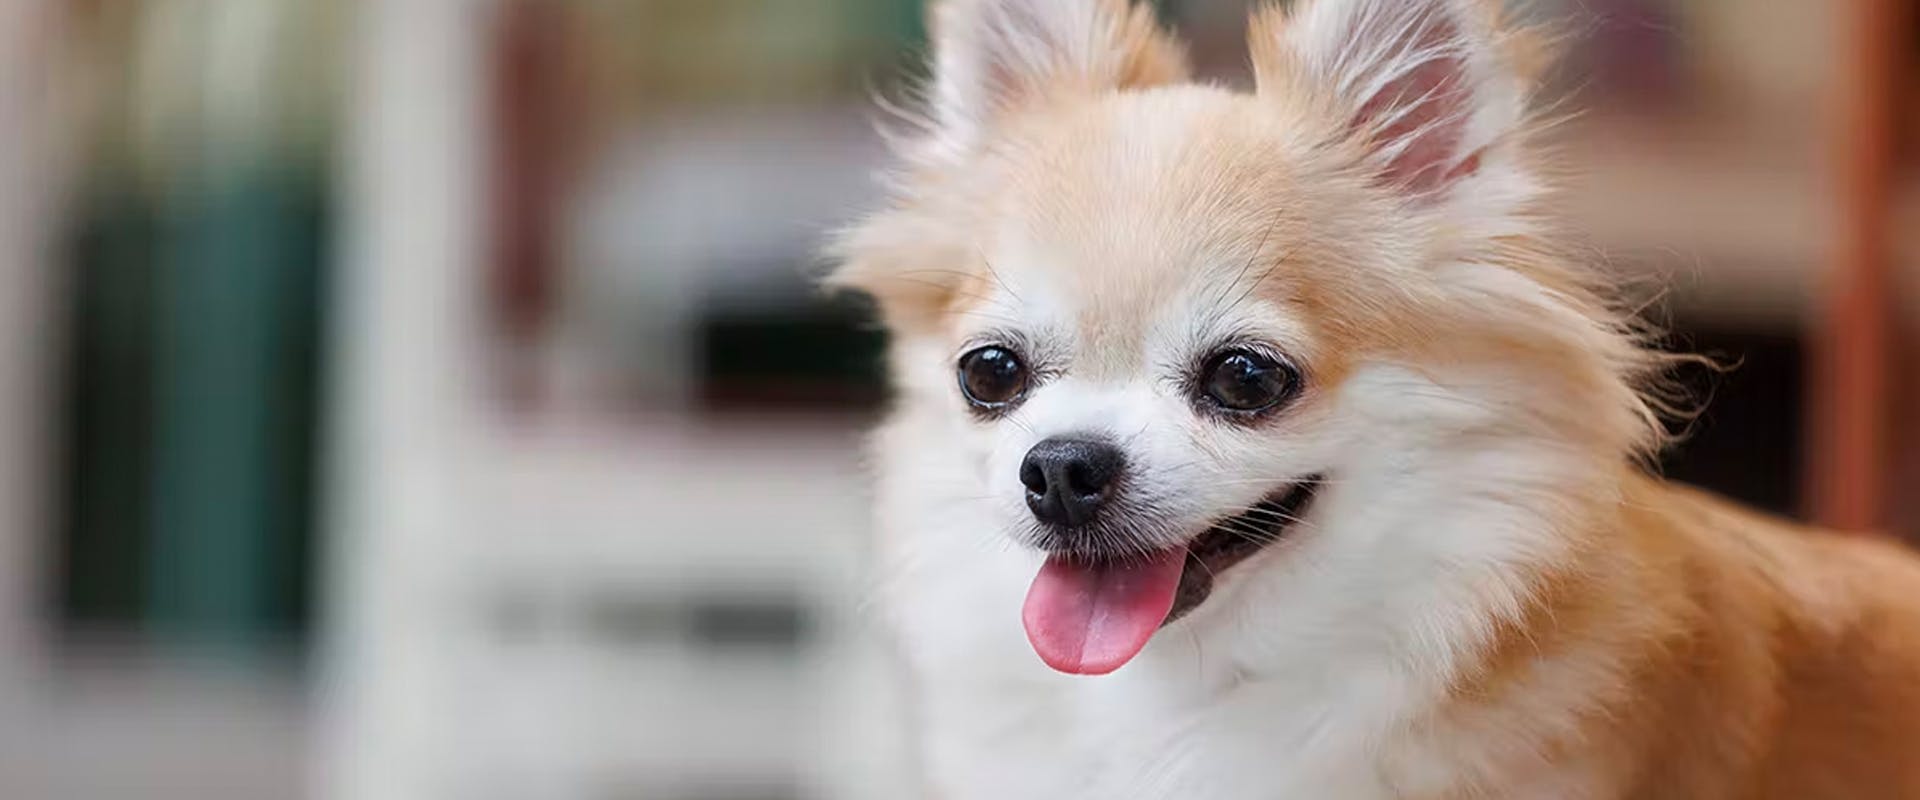 A Chihuahua dog